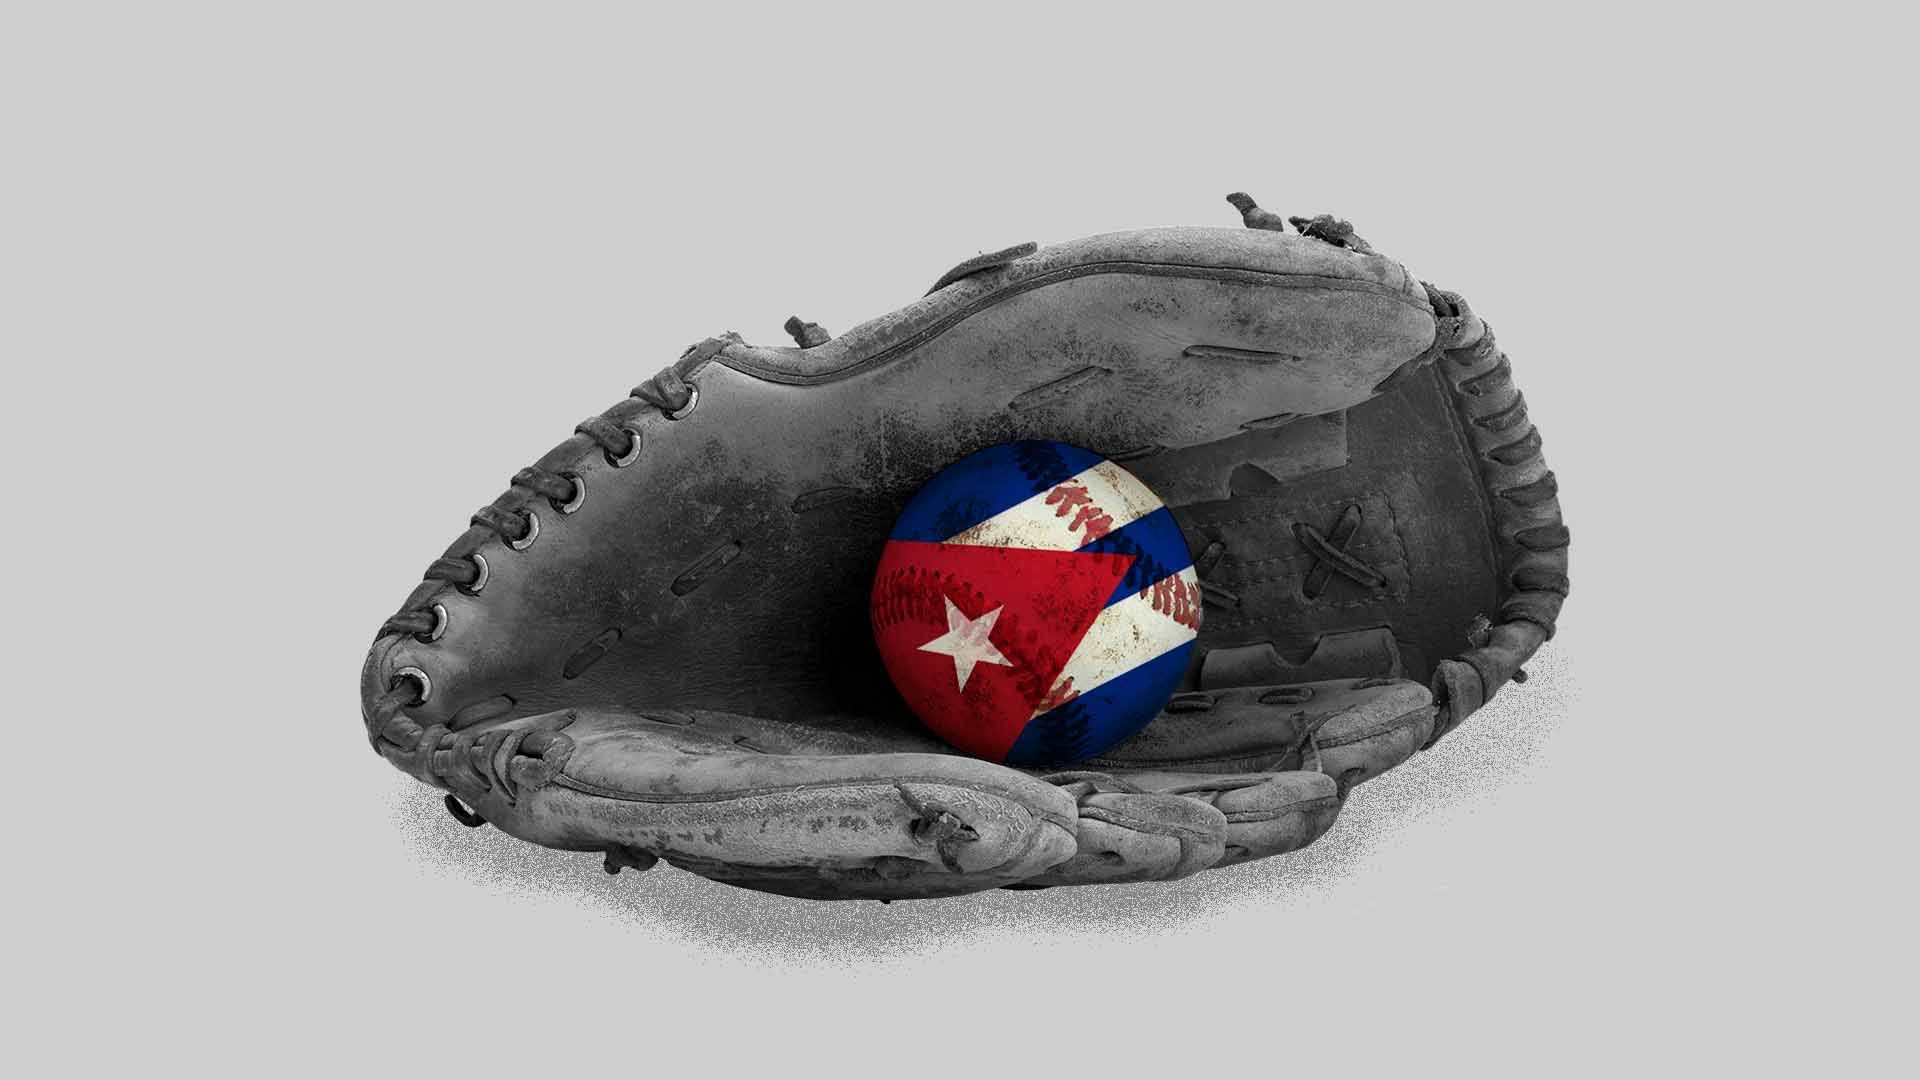 Illustration of a baseball glove on the ground with a Cuban-flag baseball